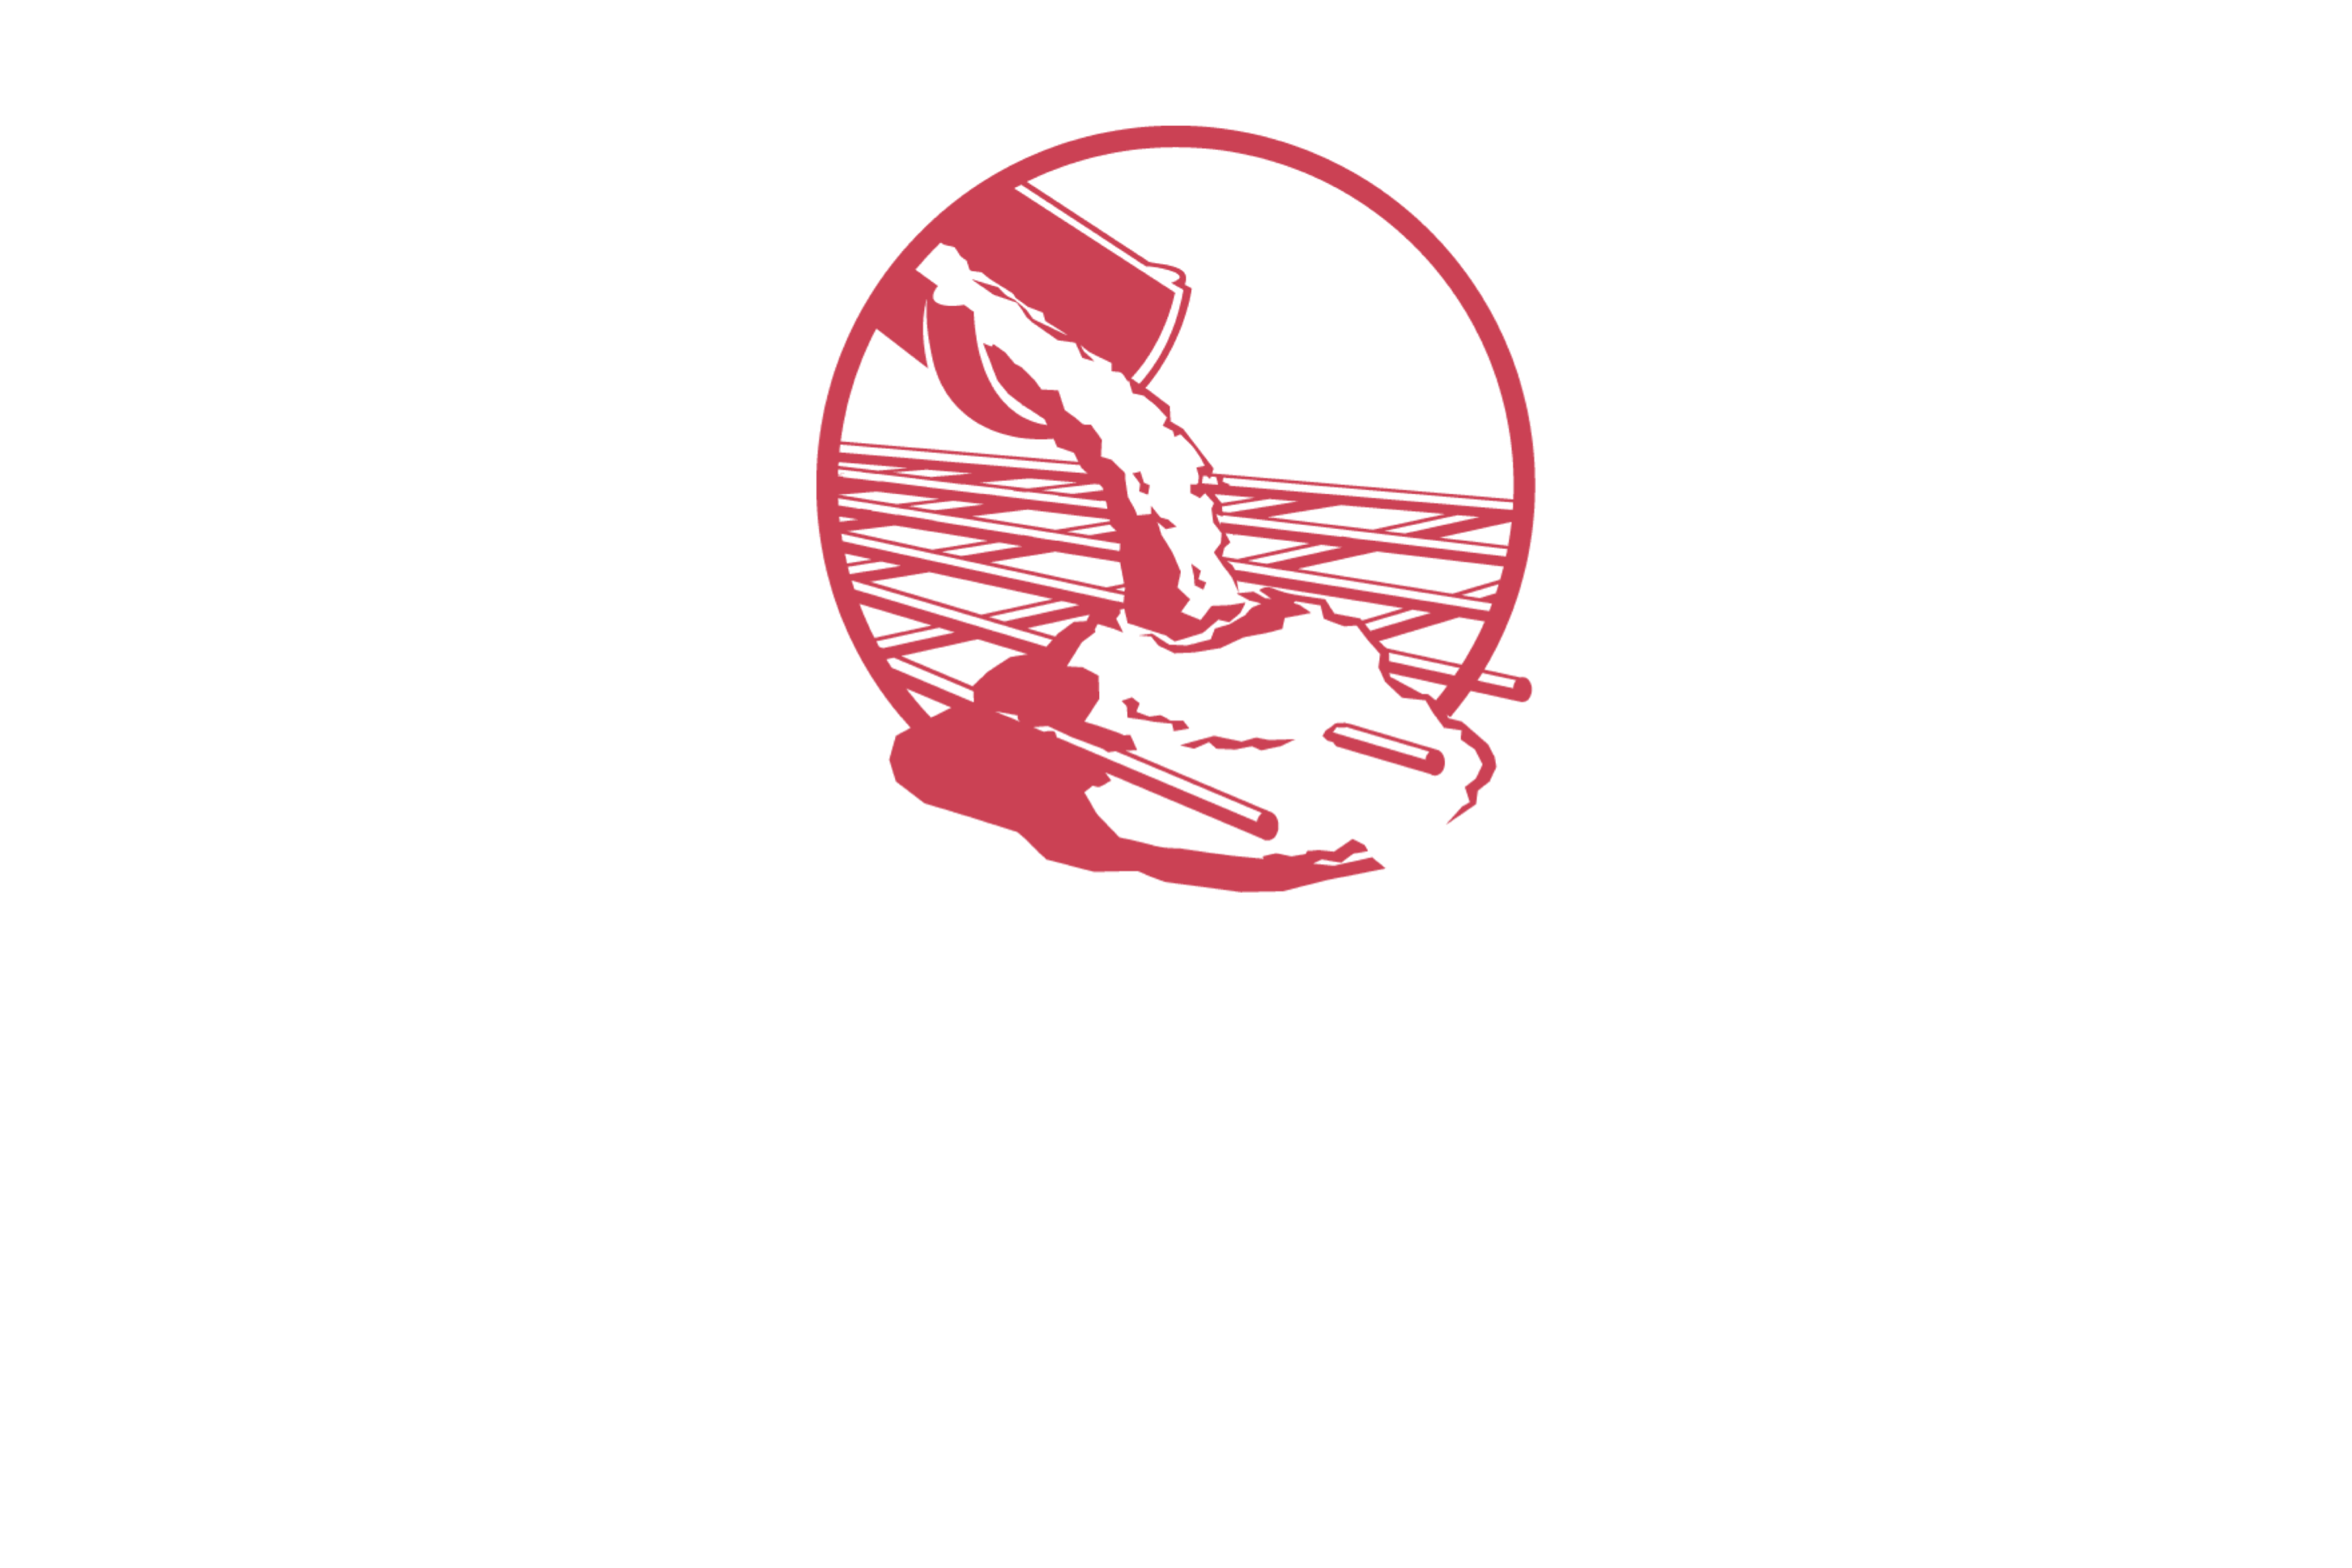 CS Concrete LLC